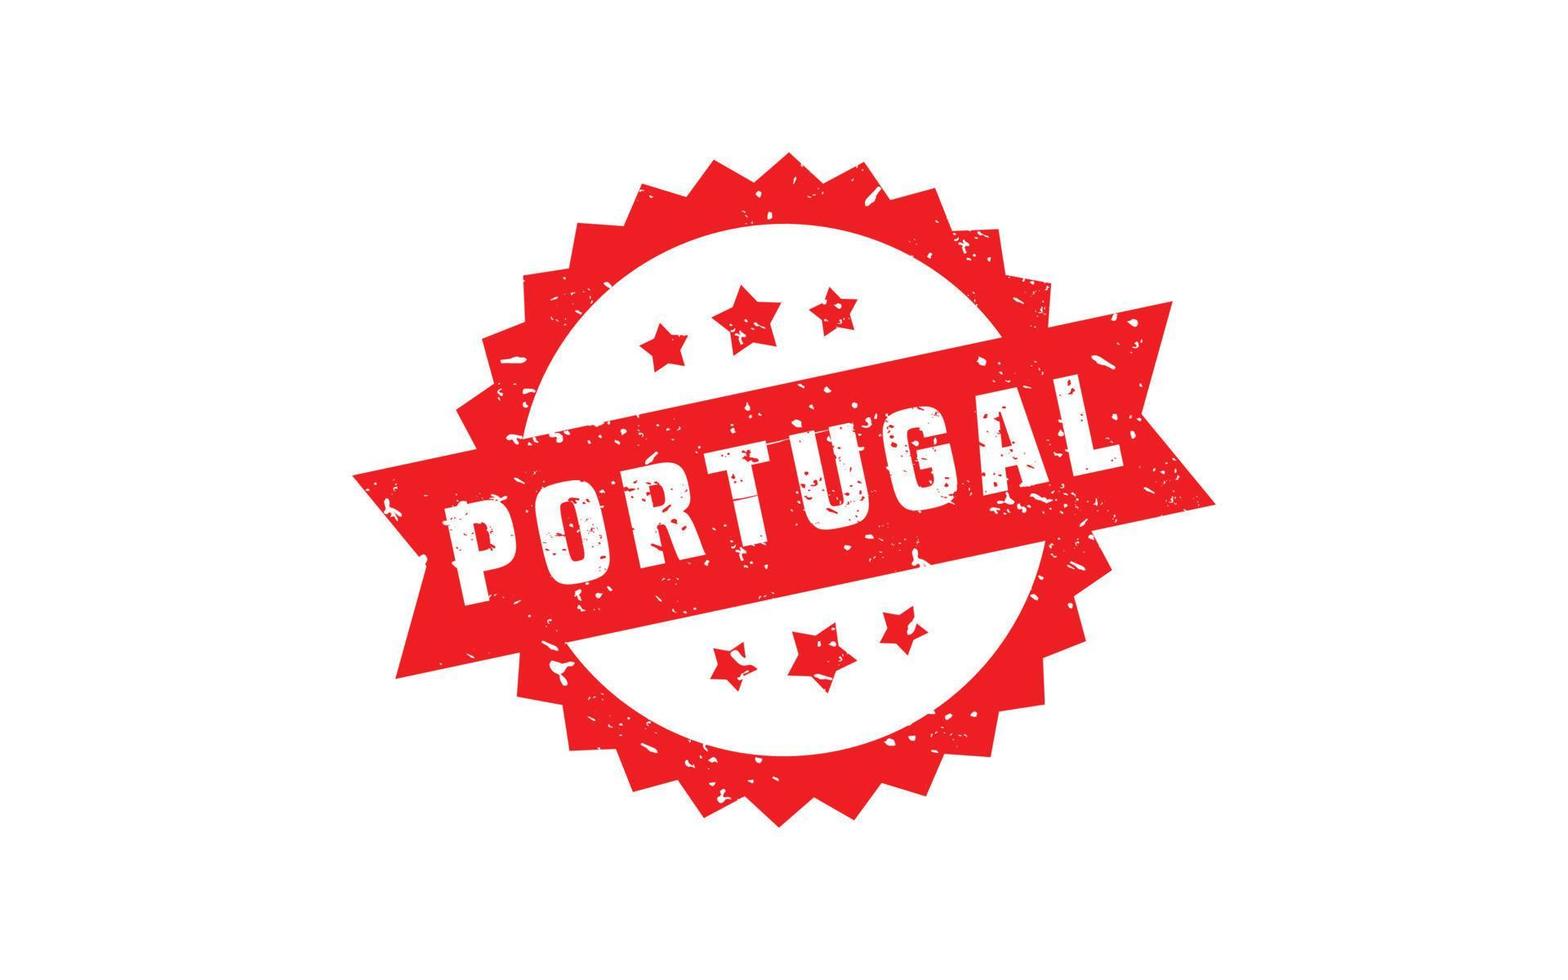 portugal stämpel sudd med grunge stil på vit bakgrund vektor